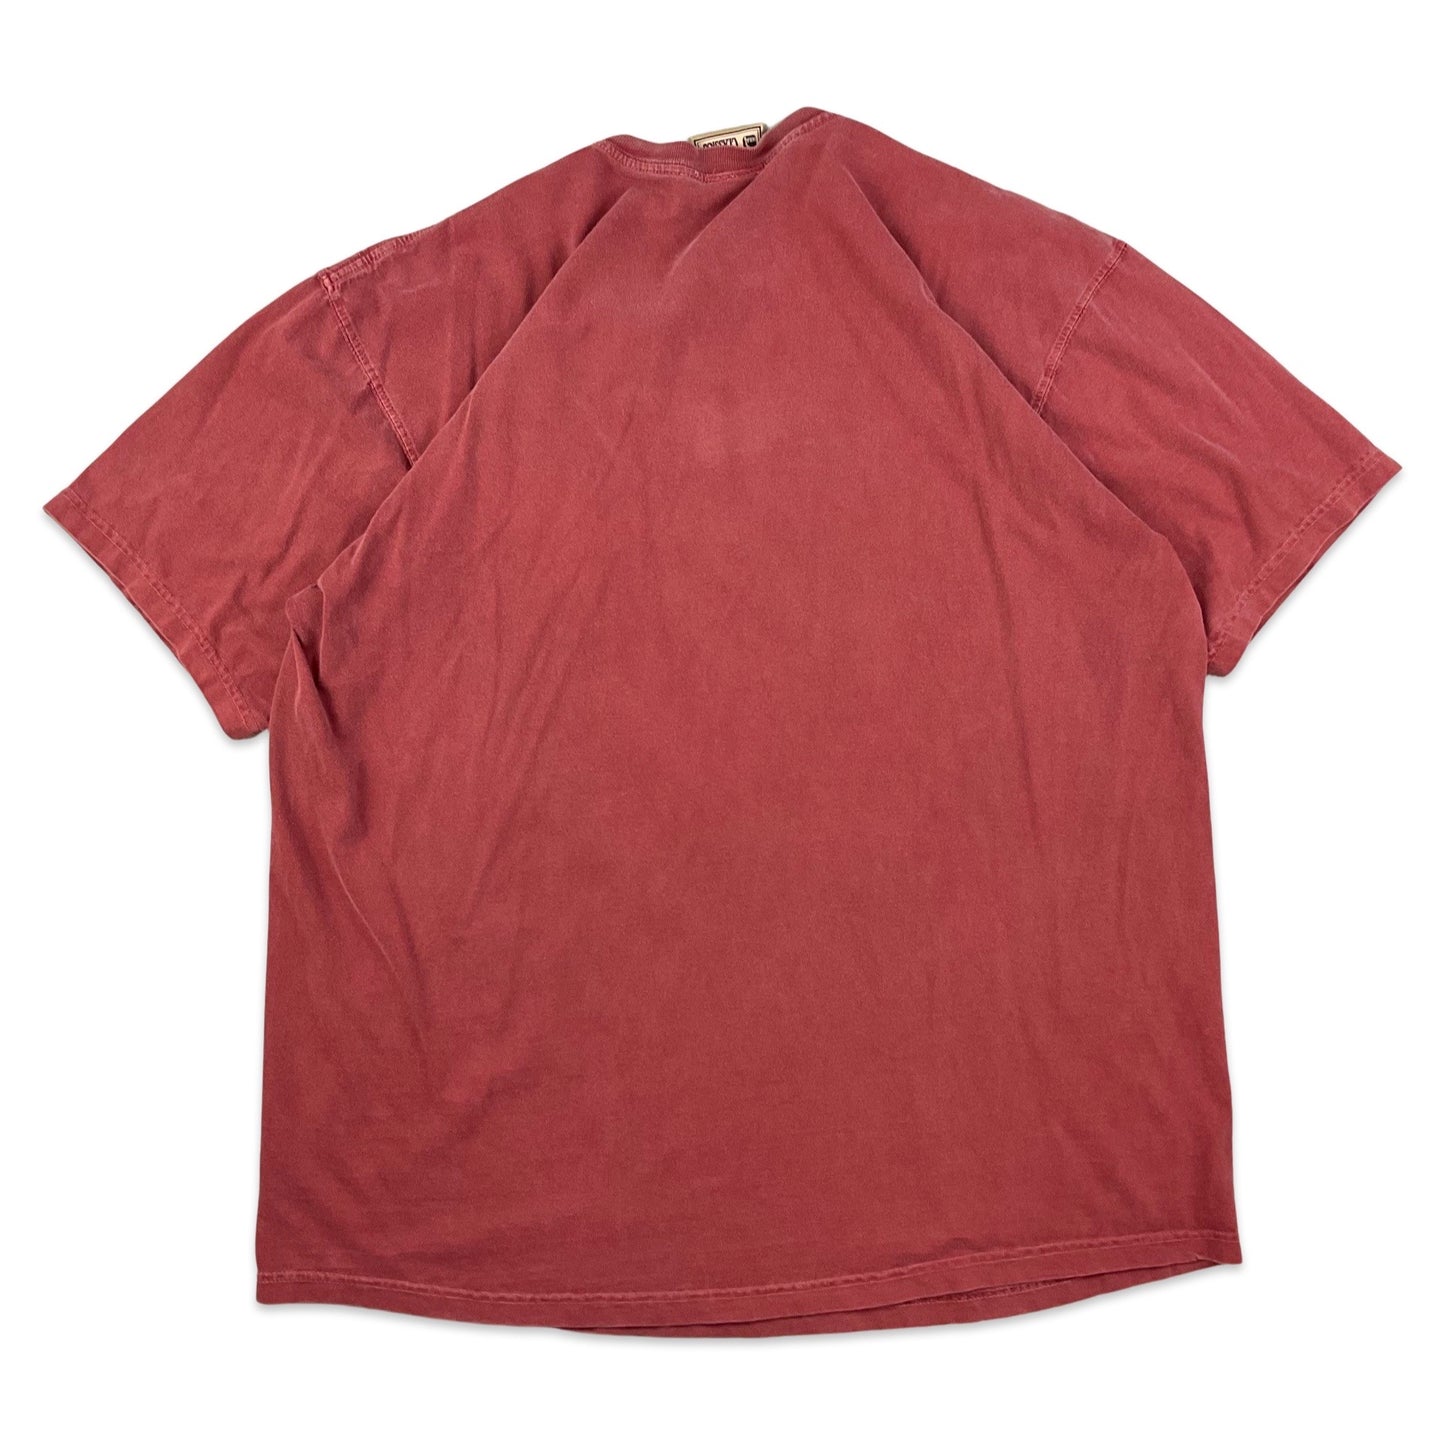 Vintage Red Chicago Bulls Graphic Tee T-Shirt XL XXL